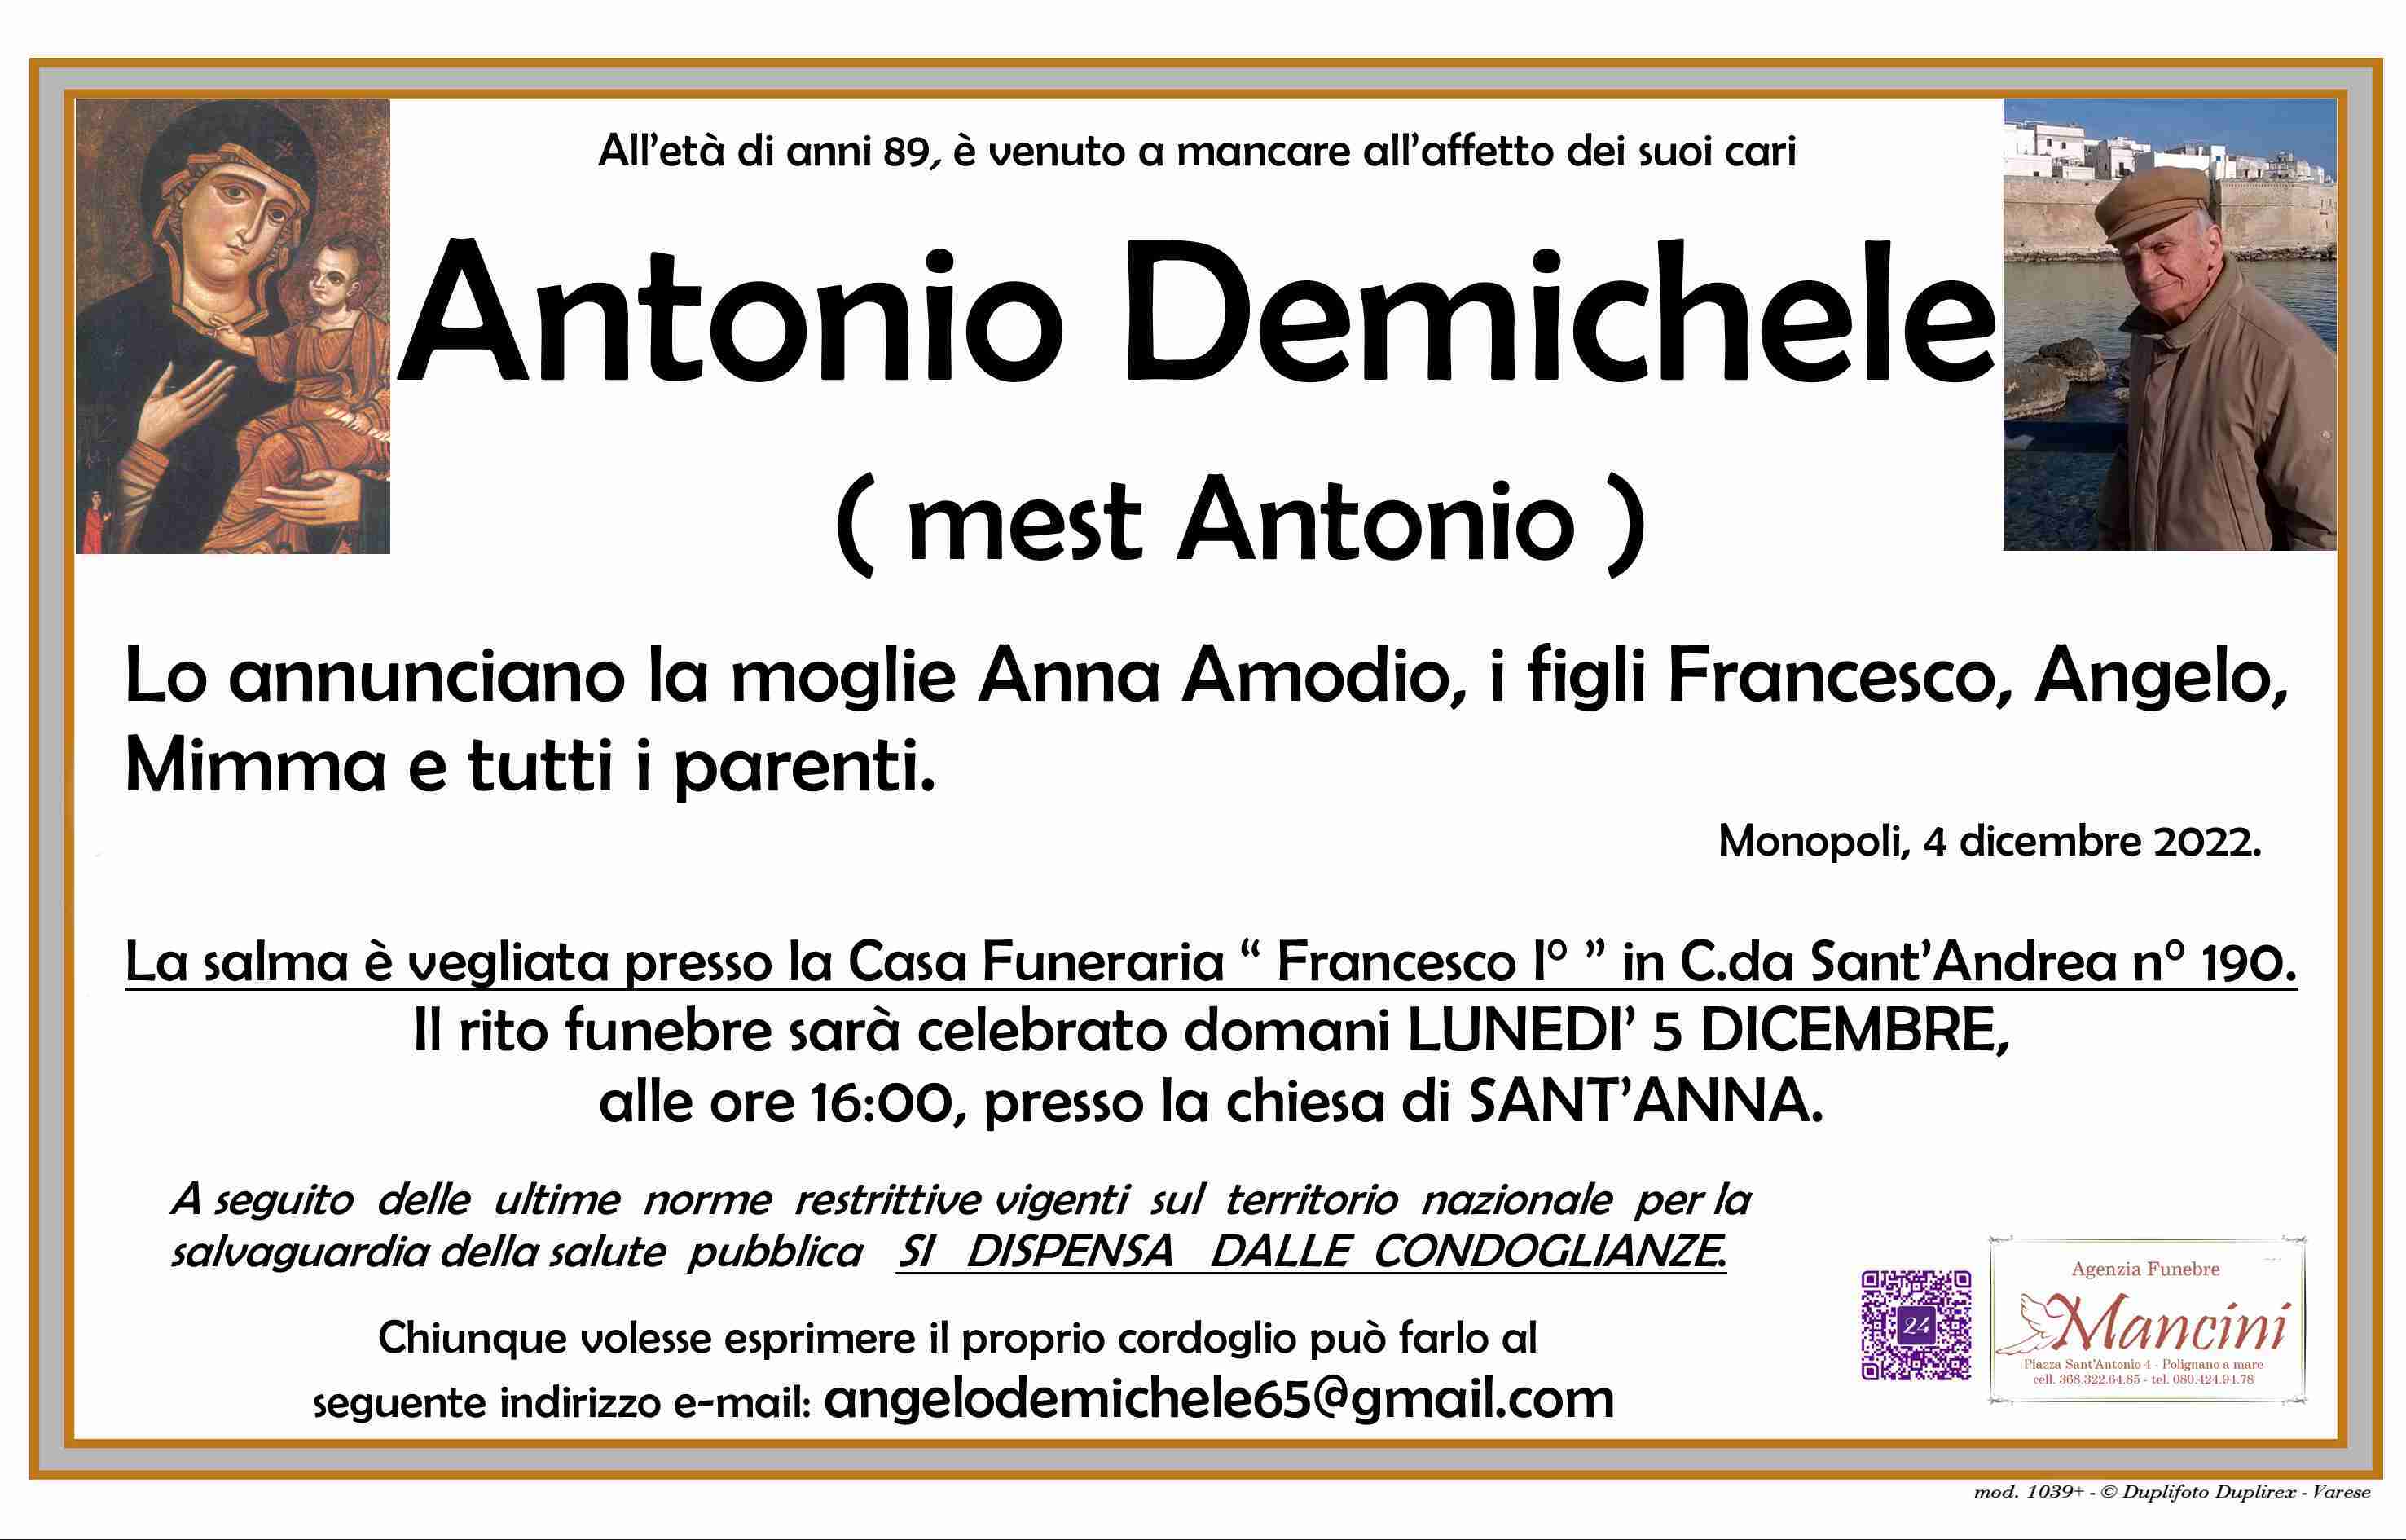 Antonio Demichele